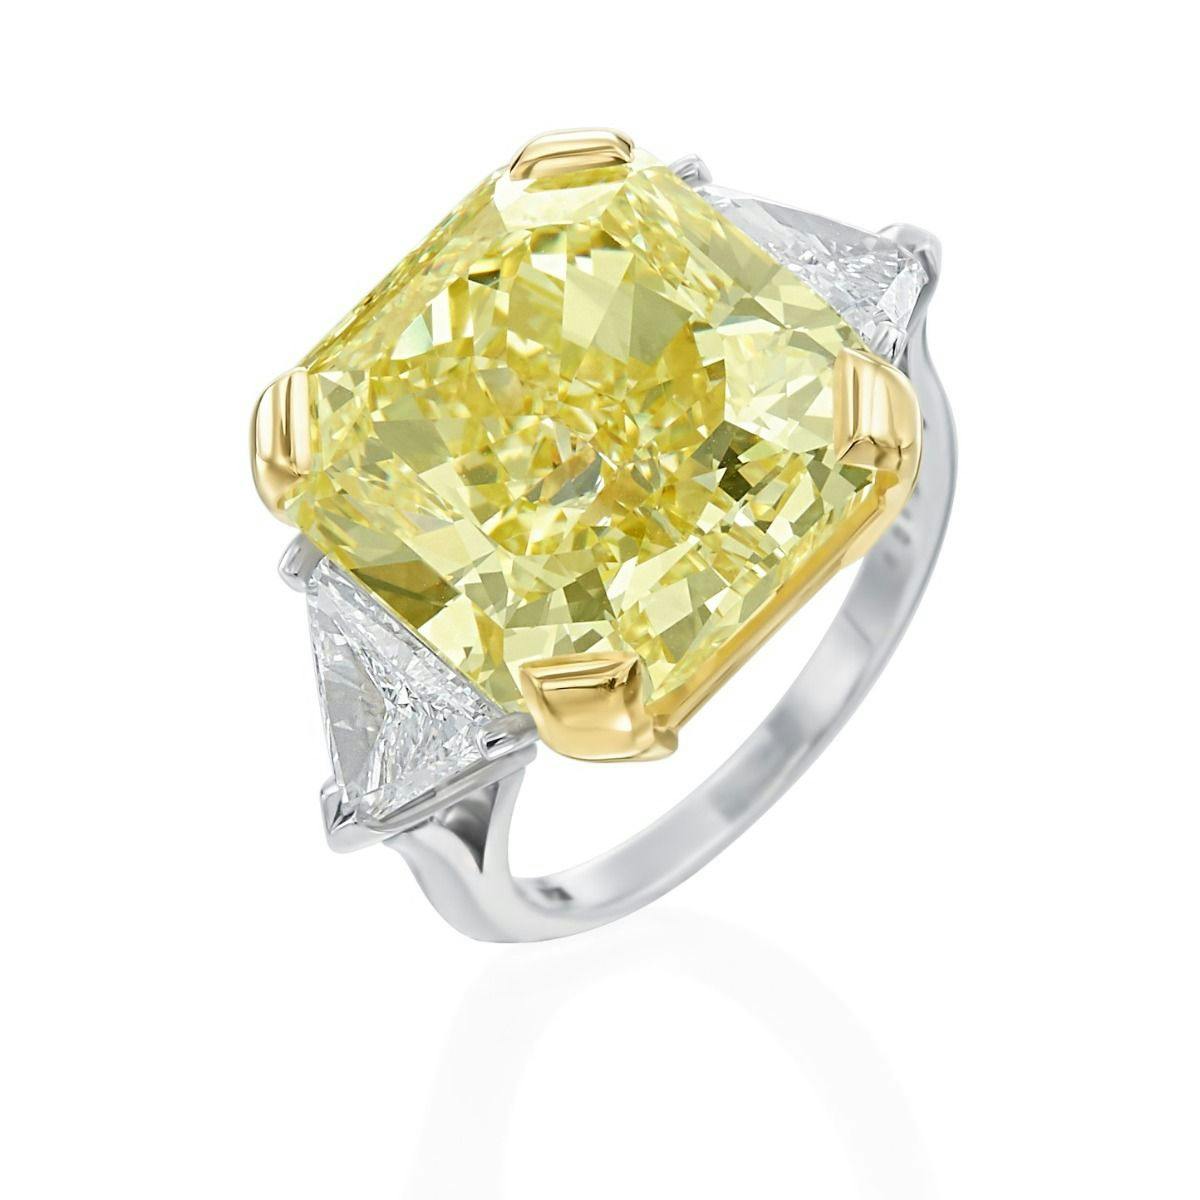 22 CT Natural Fancy Yellow Diamond 18k Yellow Gold & Platinum Engagement Ring